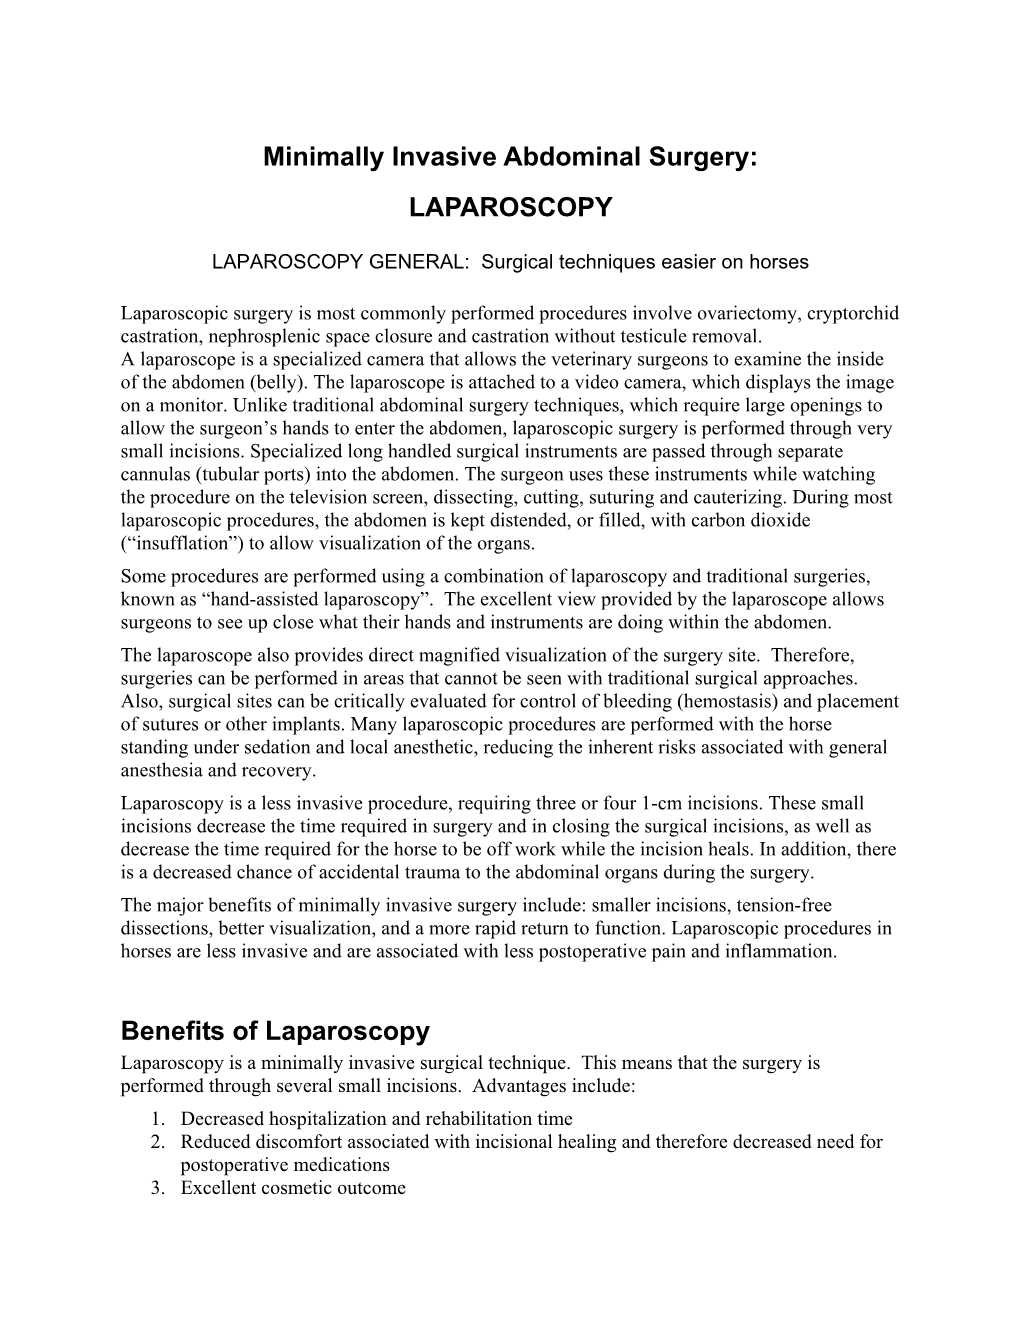 Minimally Invasive Abdominal Surgery: LAPAROSCOPY